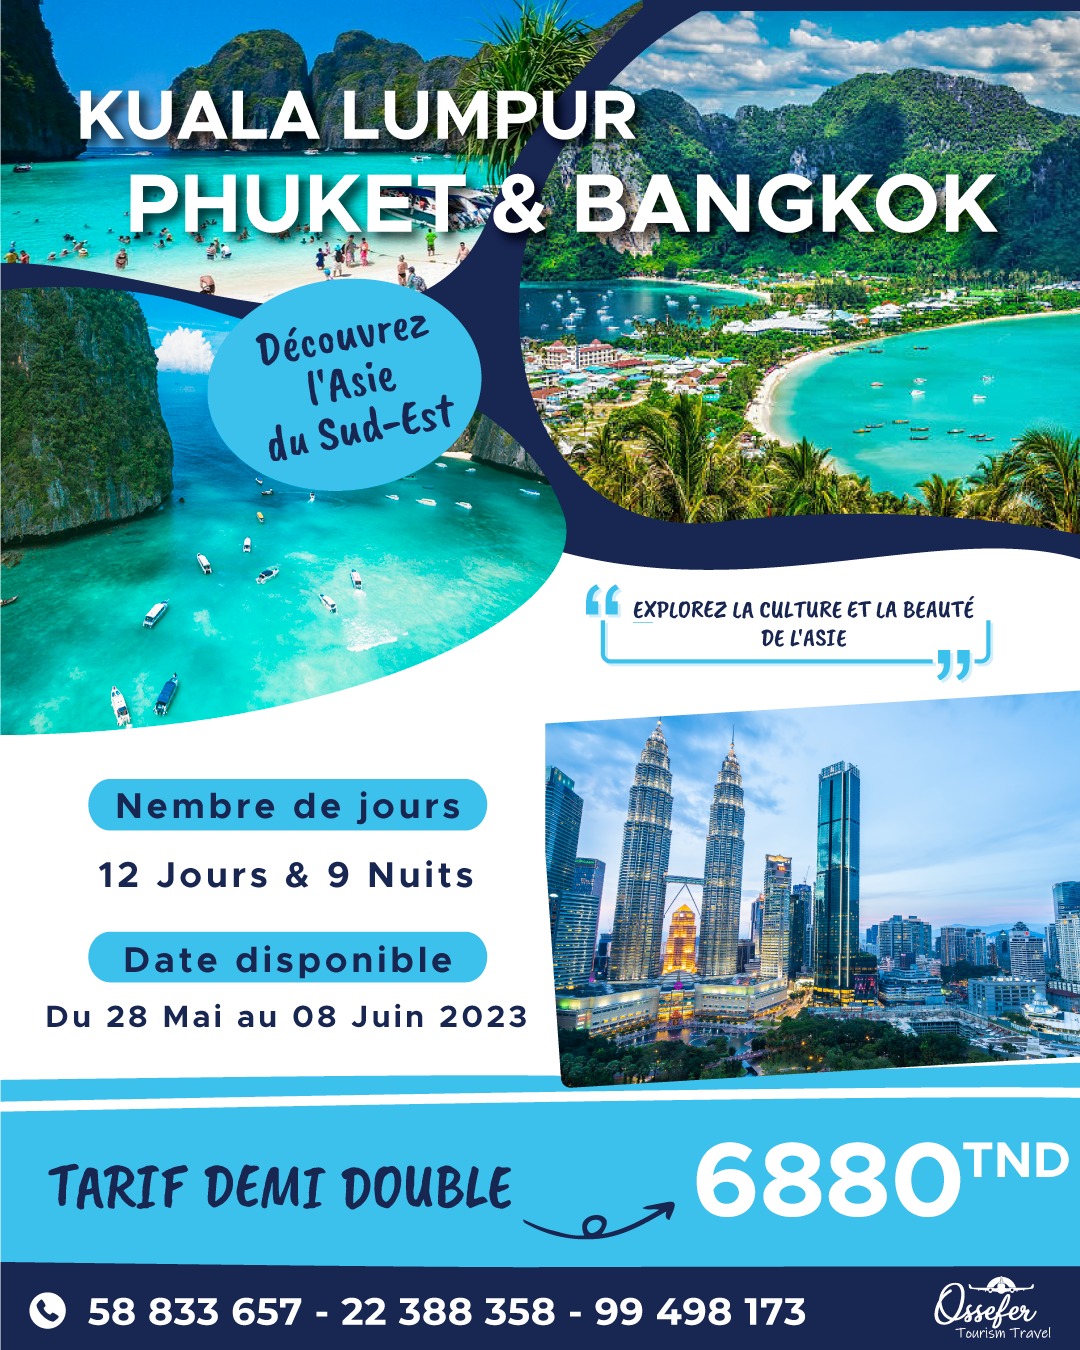 Kuala Lumpur Phuket & Bangkok